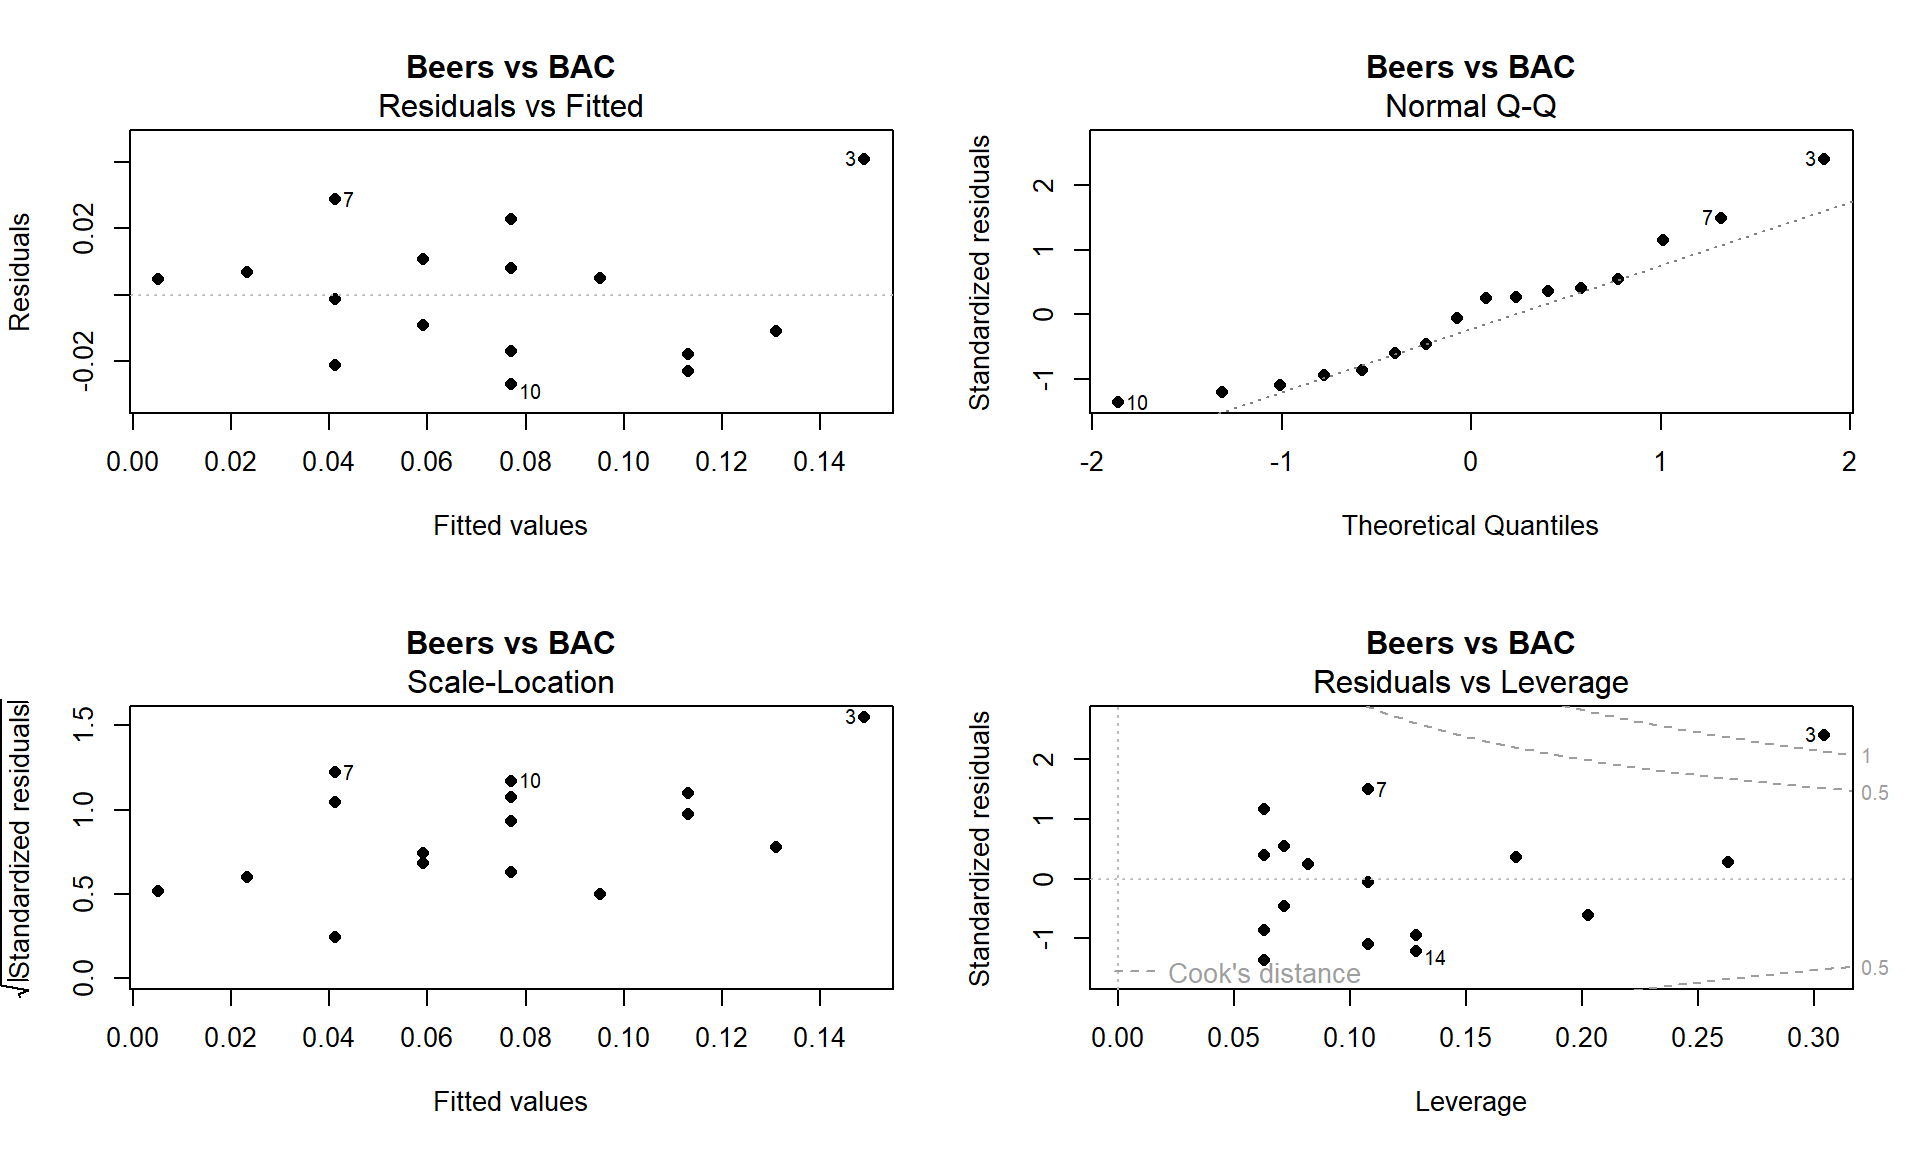 Full suite of diagnostics plots for Beer vs BAC data.